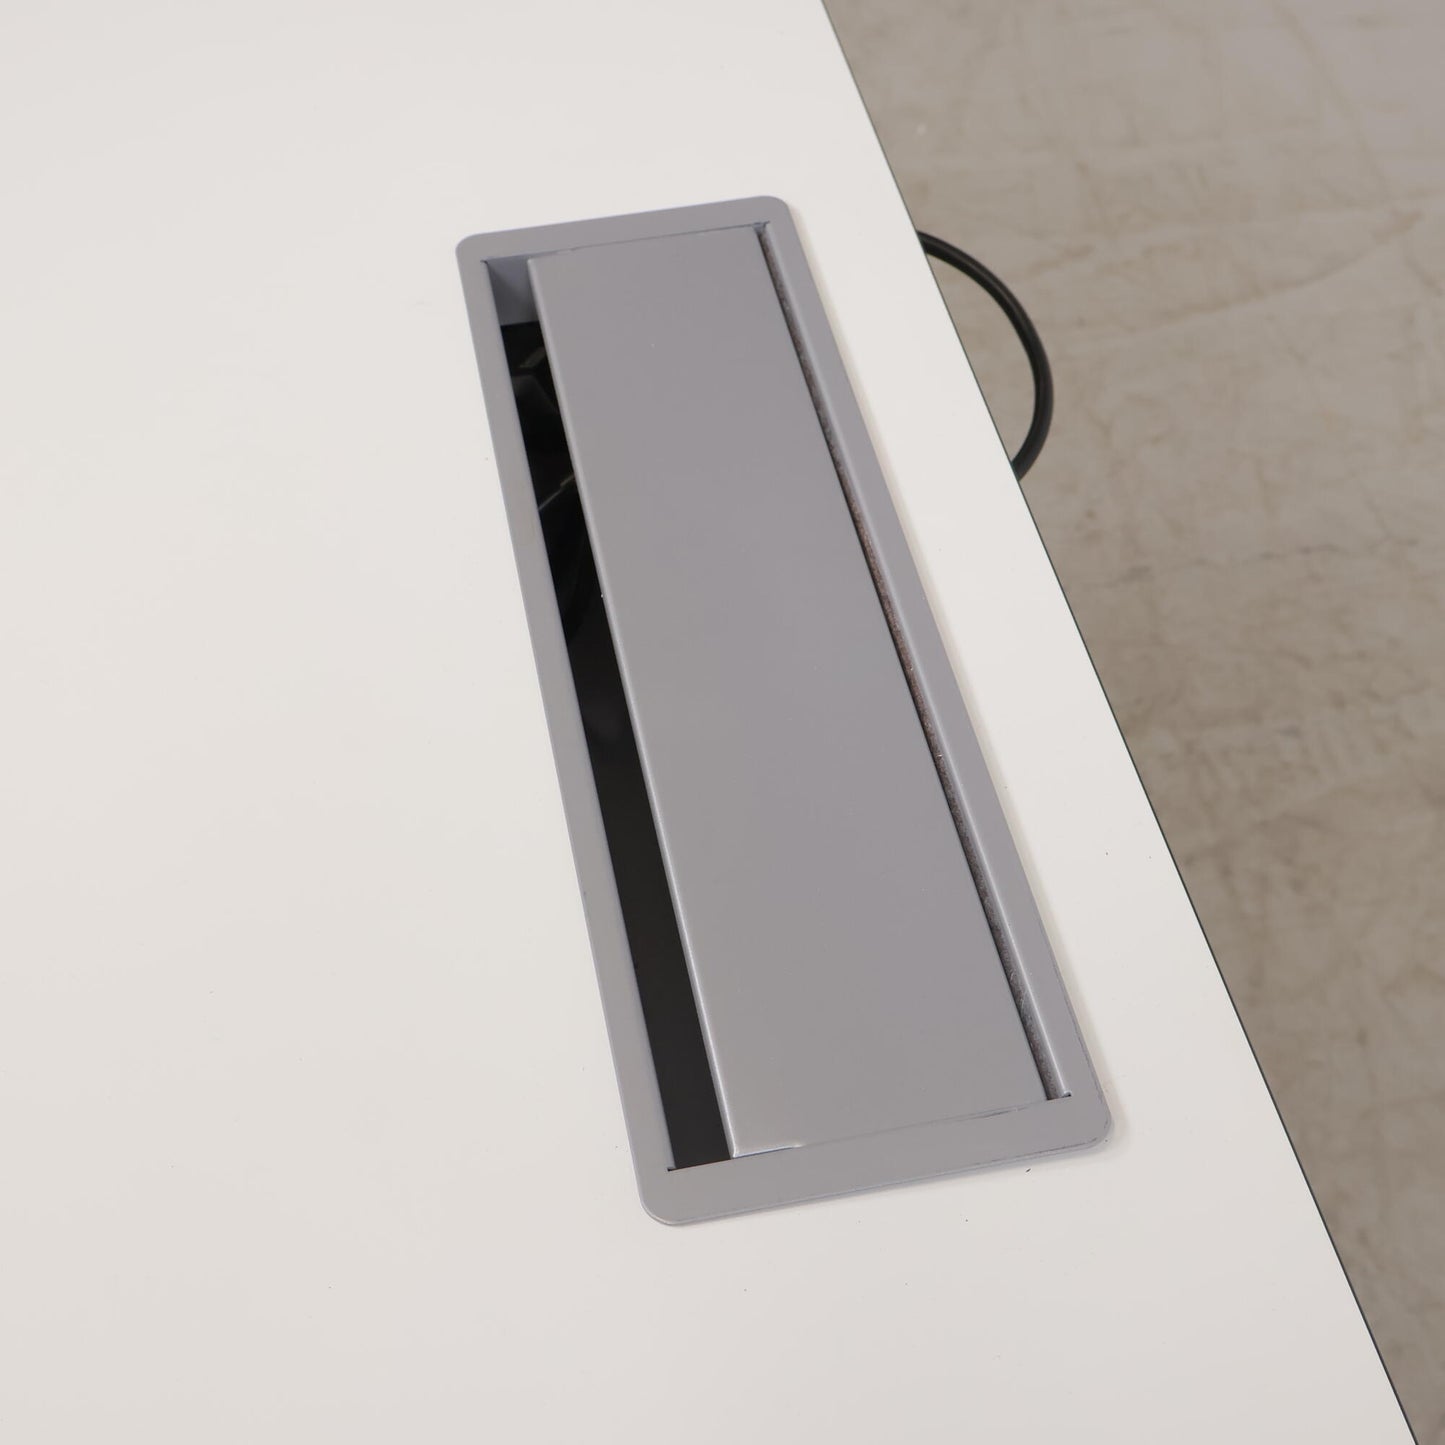 Kvalitetssikret | 160x80 cm, Elektrisk hev/senk skrivebord med magebue